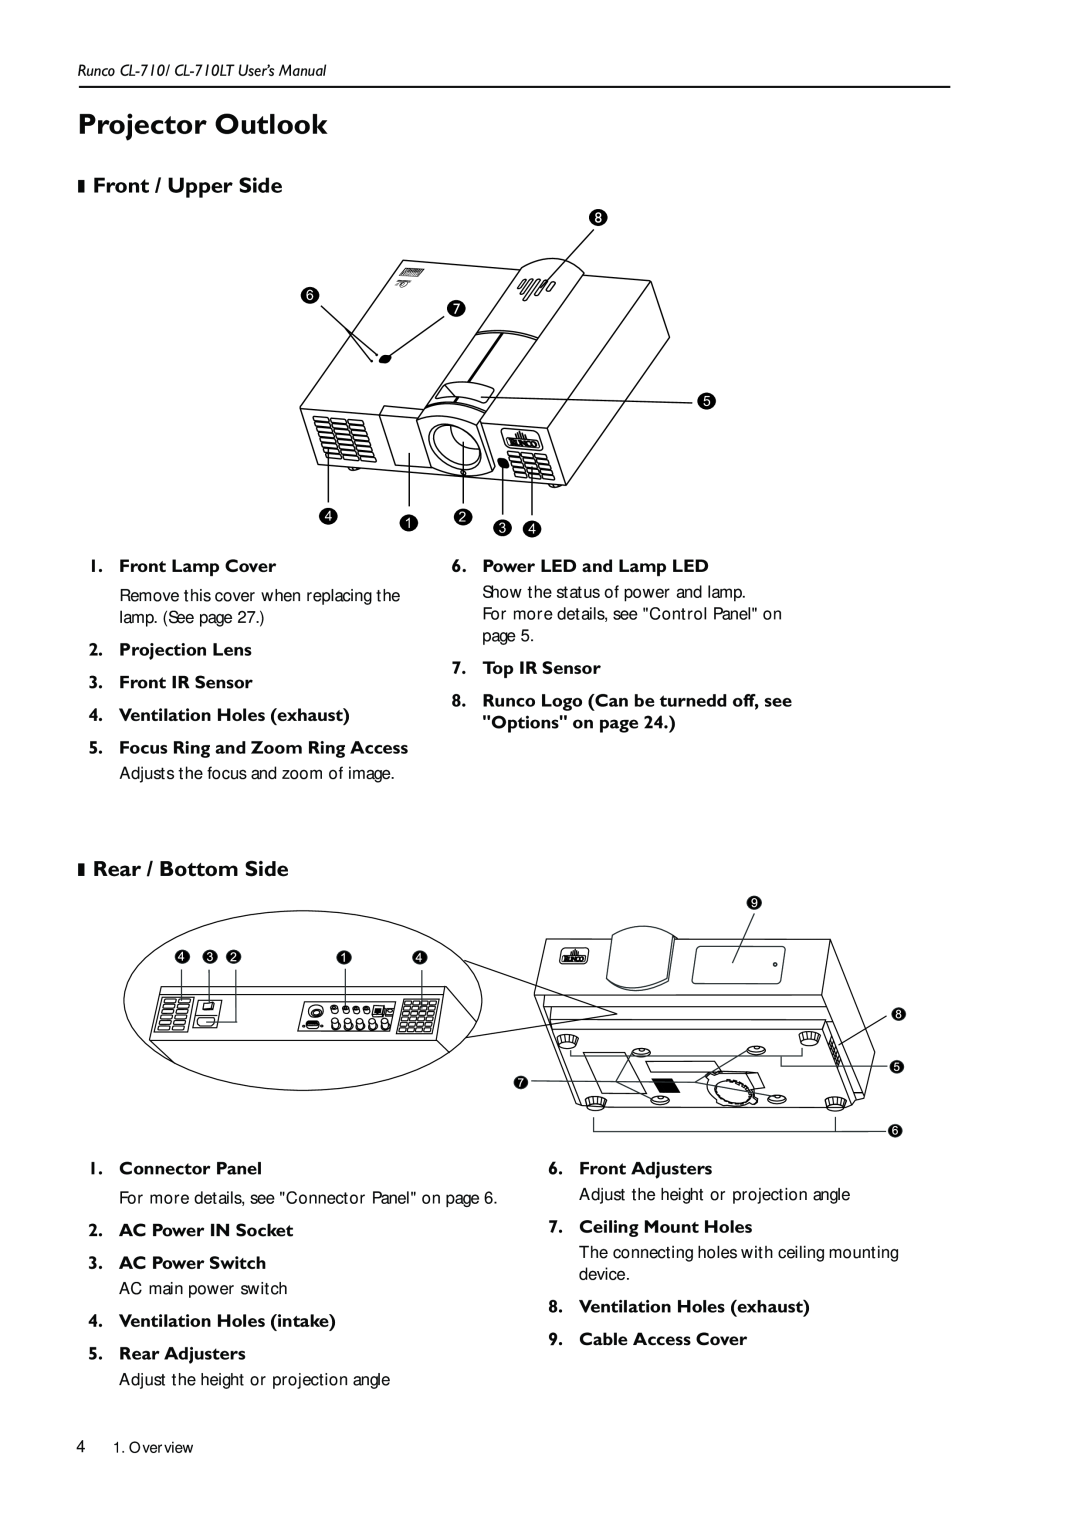 Runco CL-710LT manual Projector Outlook, Front / Upper Side, Rear / Bottom Side 